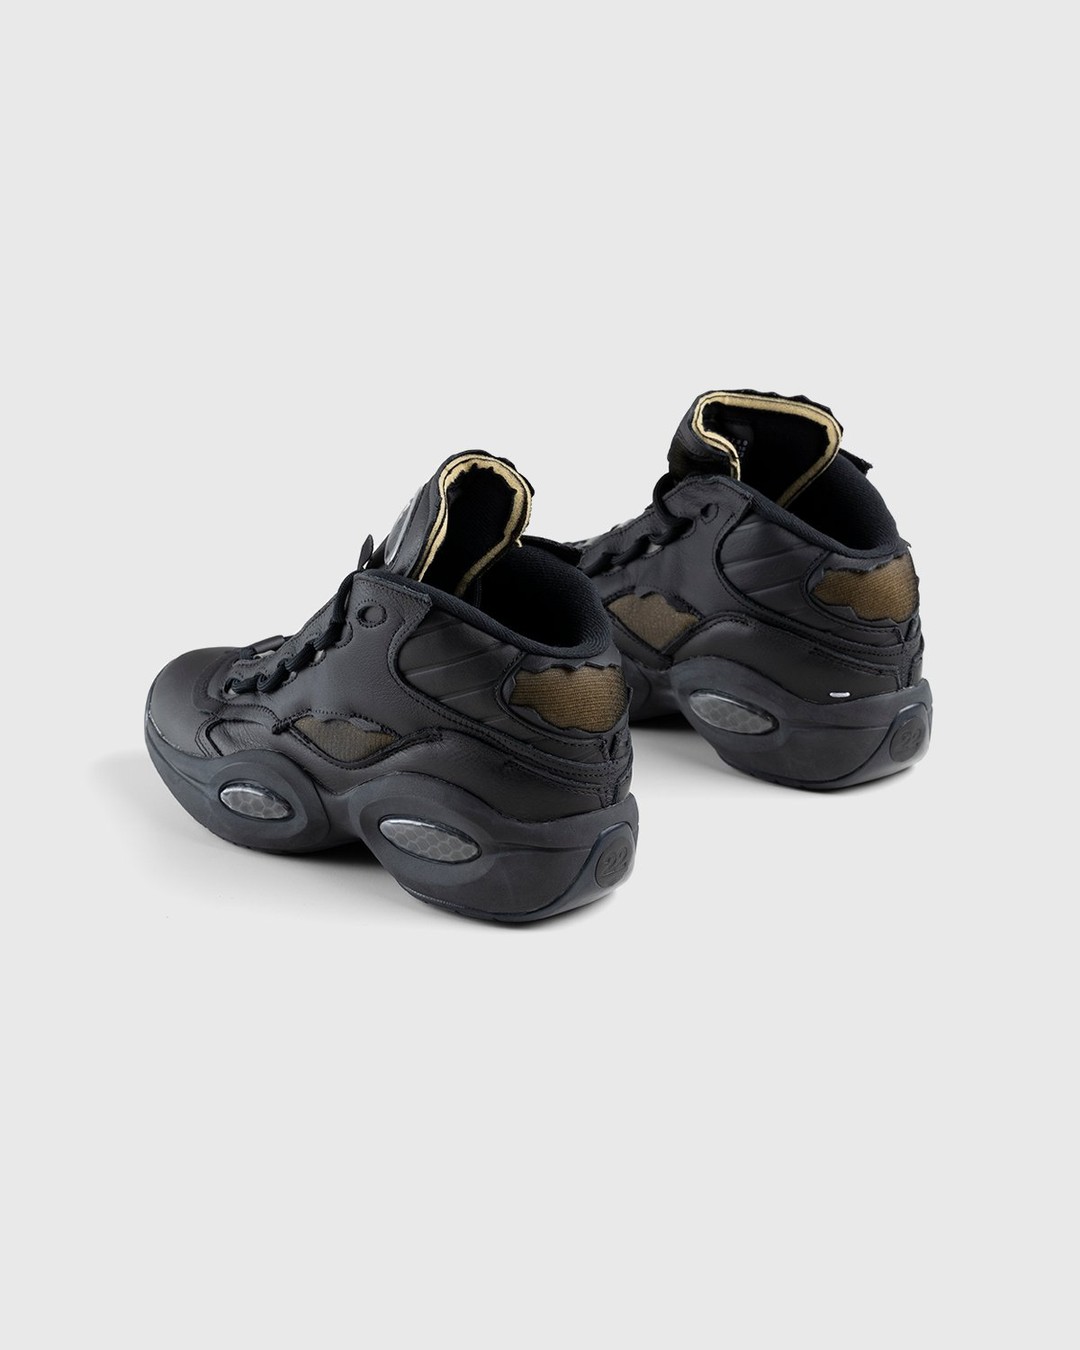 Reebok x Maison Margiela – Question Mid Memory Of Black - High Top Sneakers - Black - Image 4